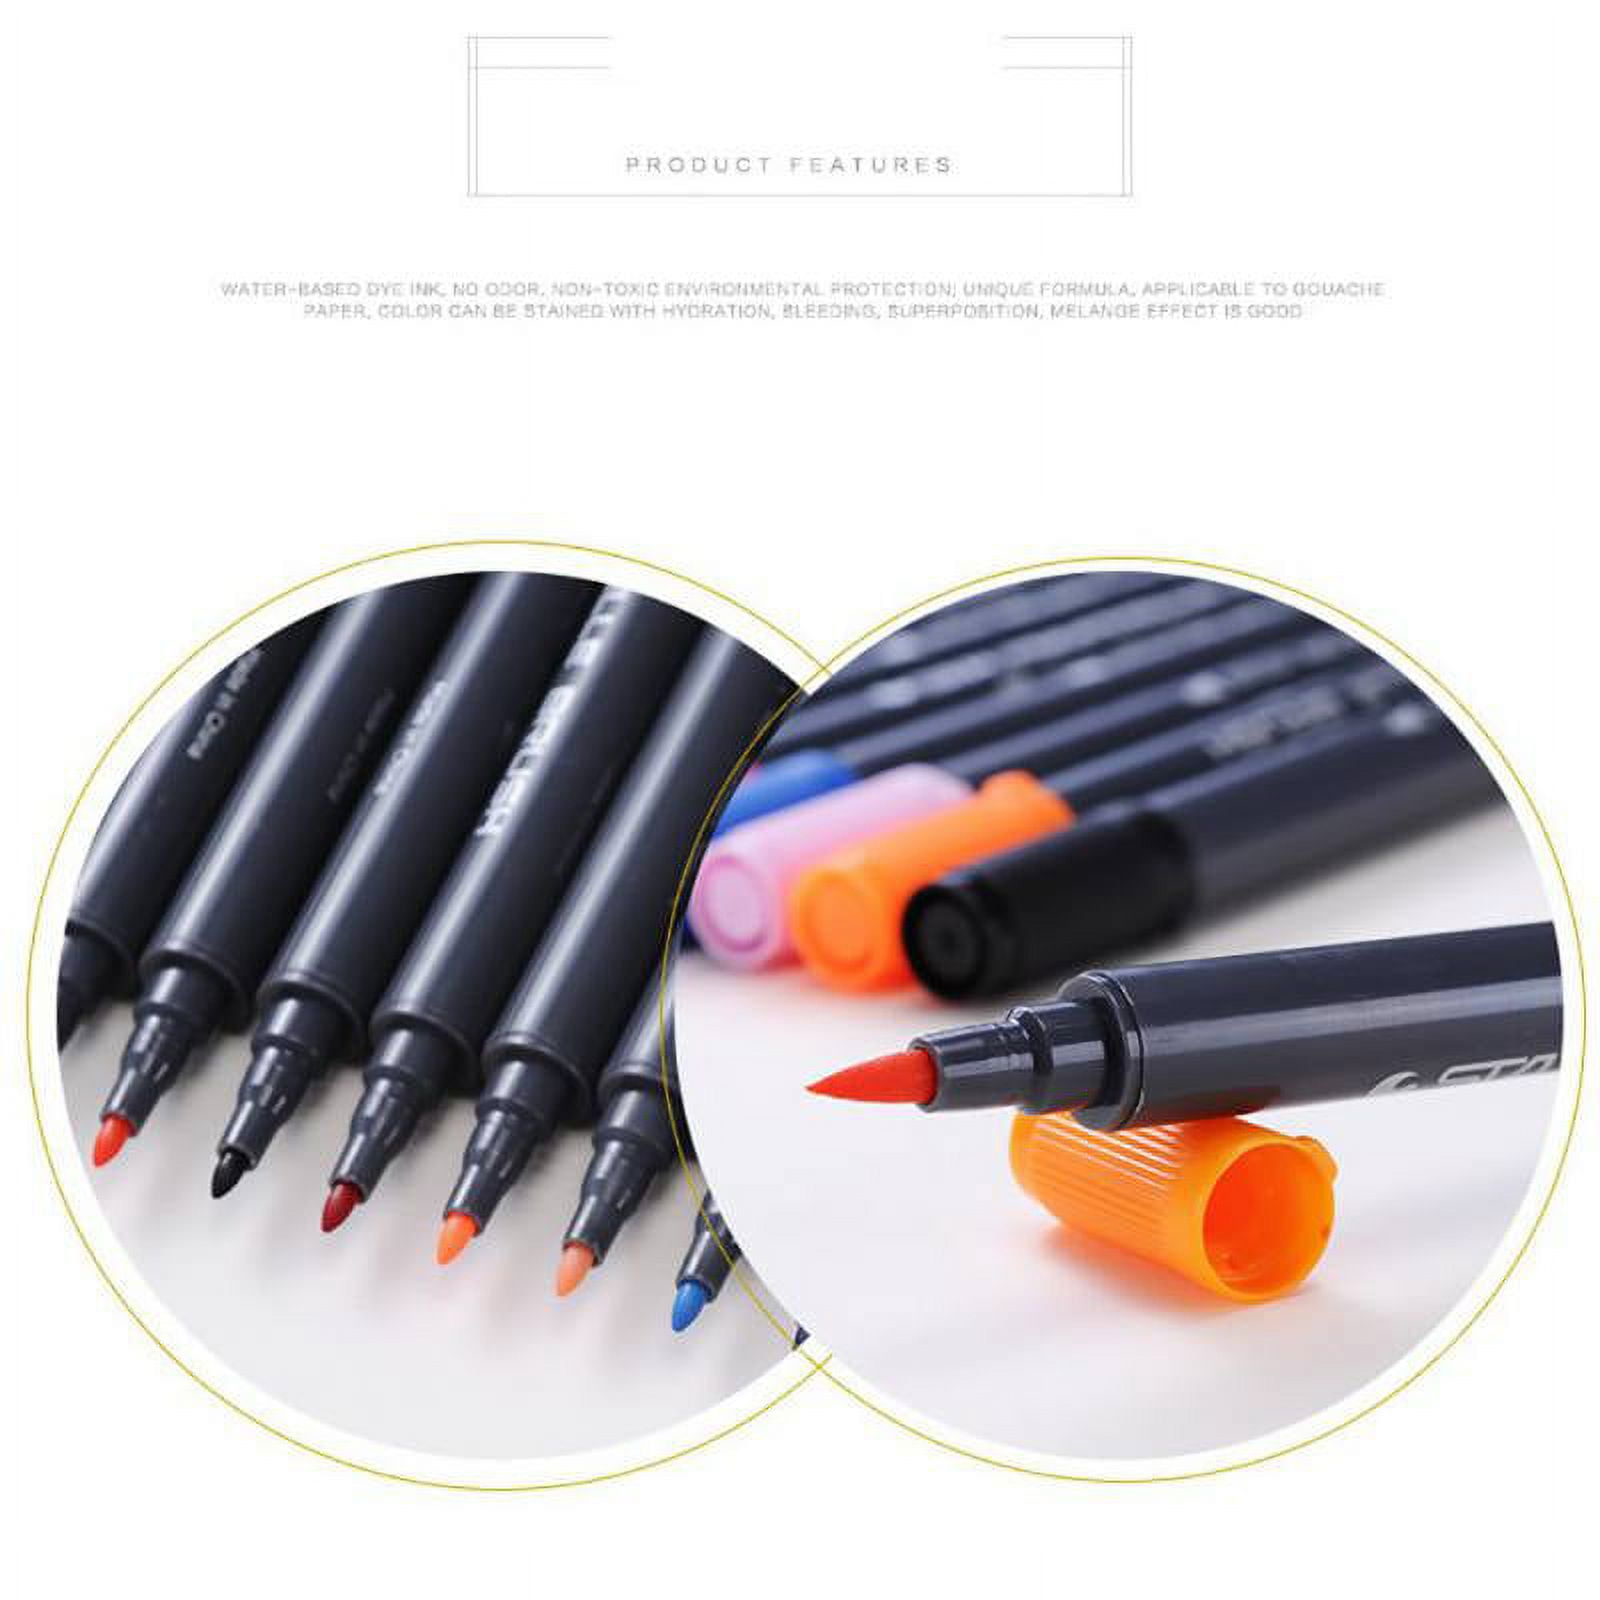 Steelwriter Metal Marking Paint Pen - Yellow - Washable Marker For Steel